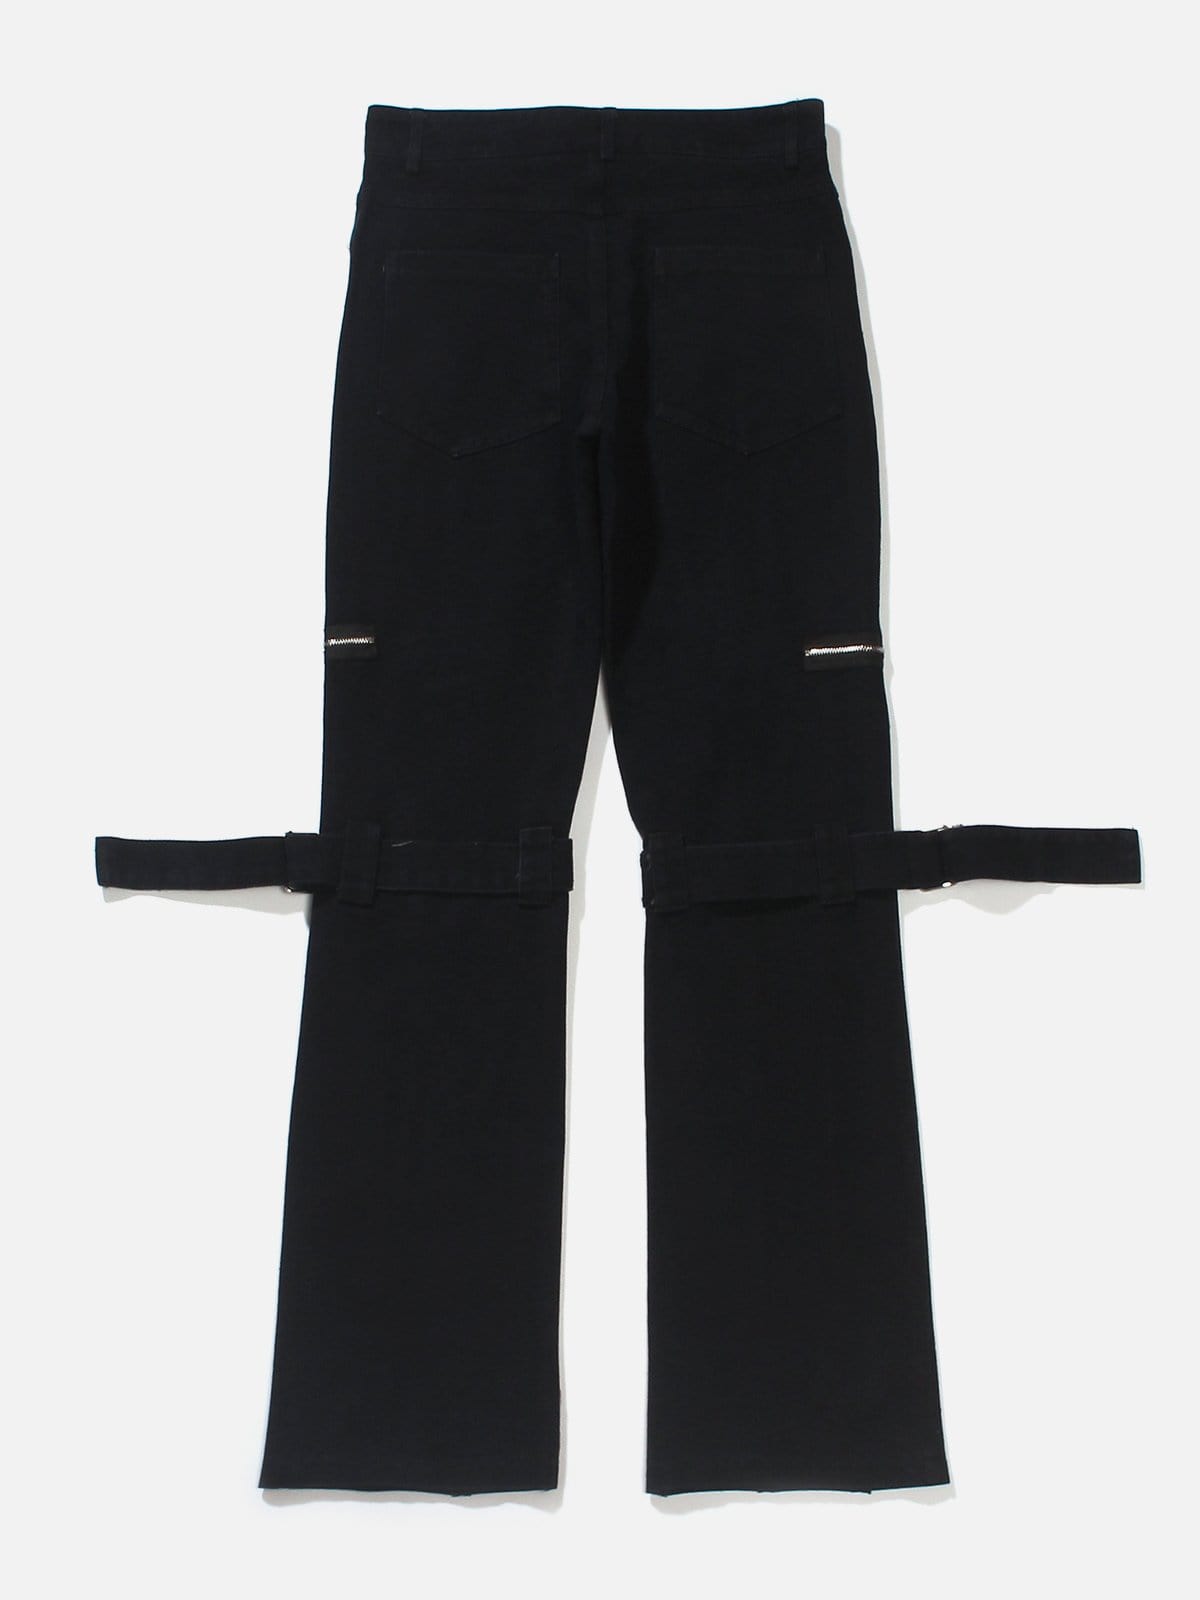 NEV Ribbon Multi-Zip Pants